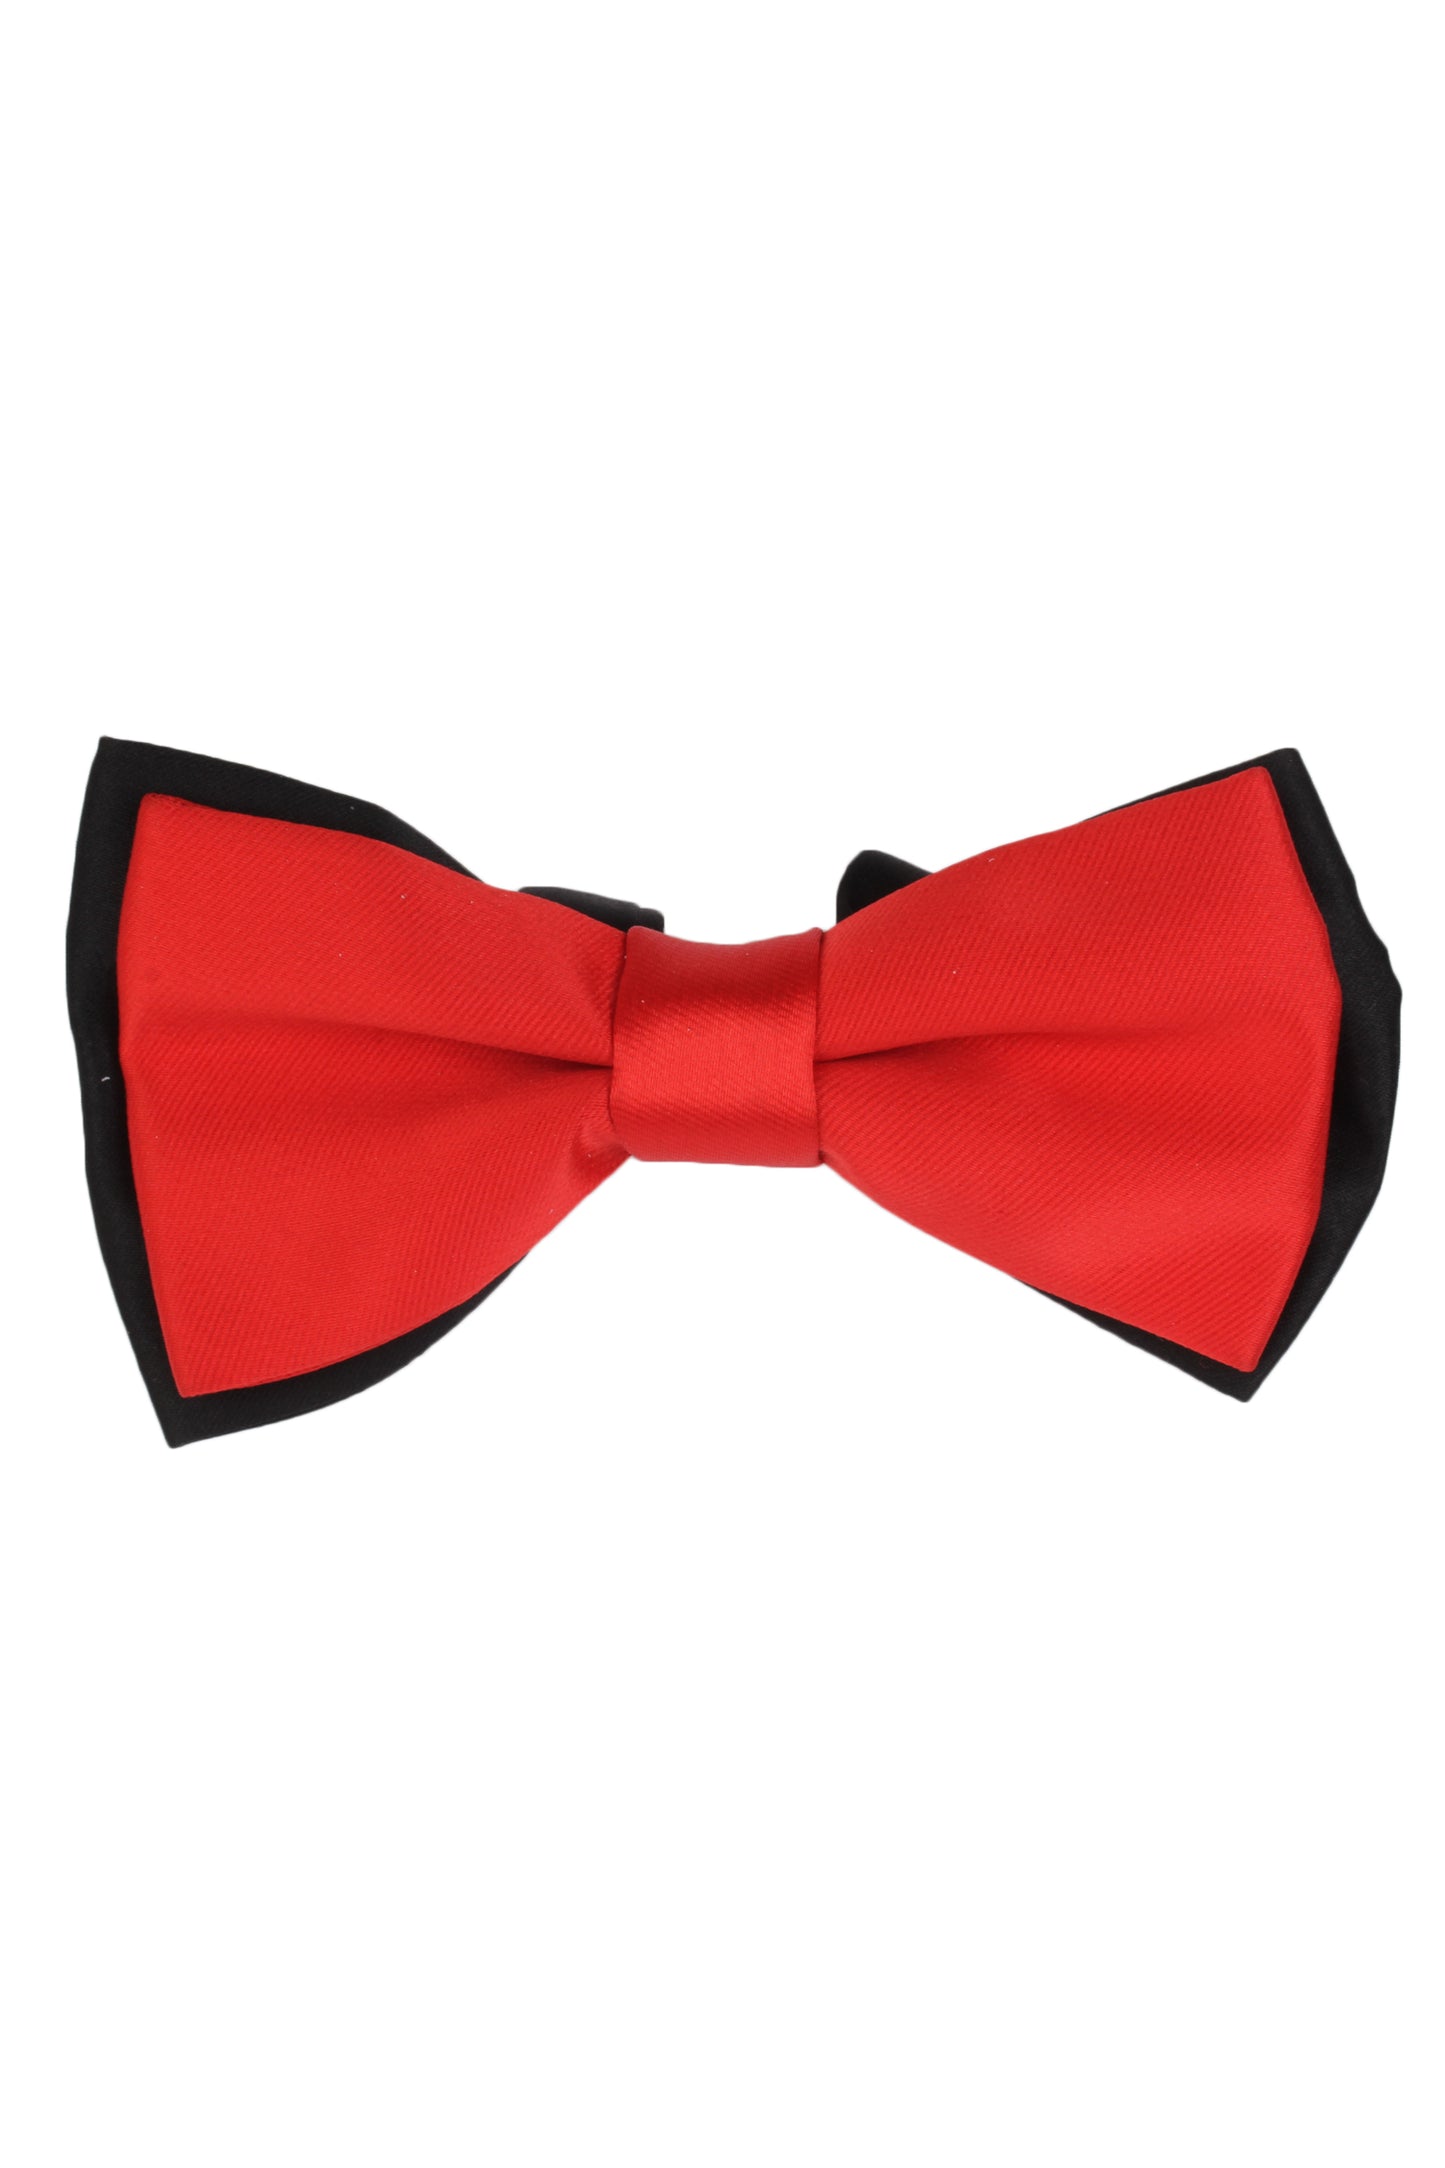 Alvaro Castagnino Men's Red Colored Bow Tie